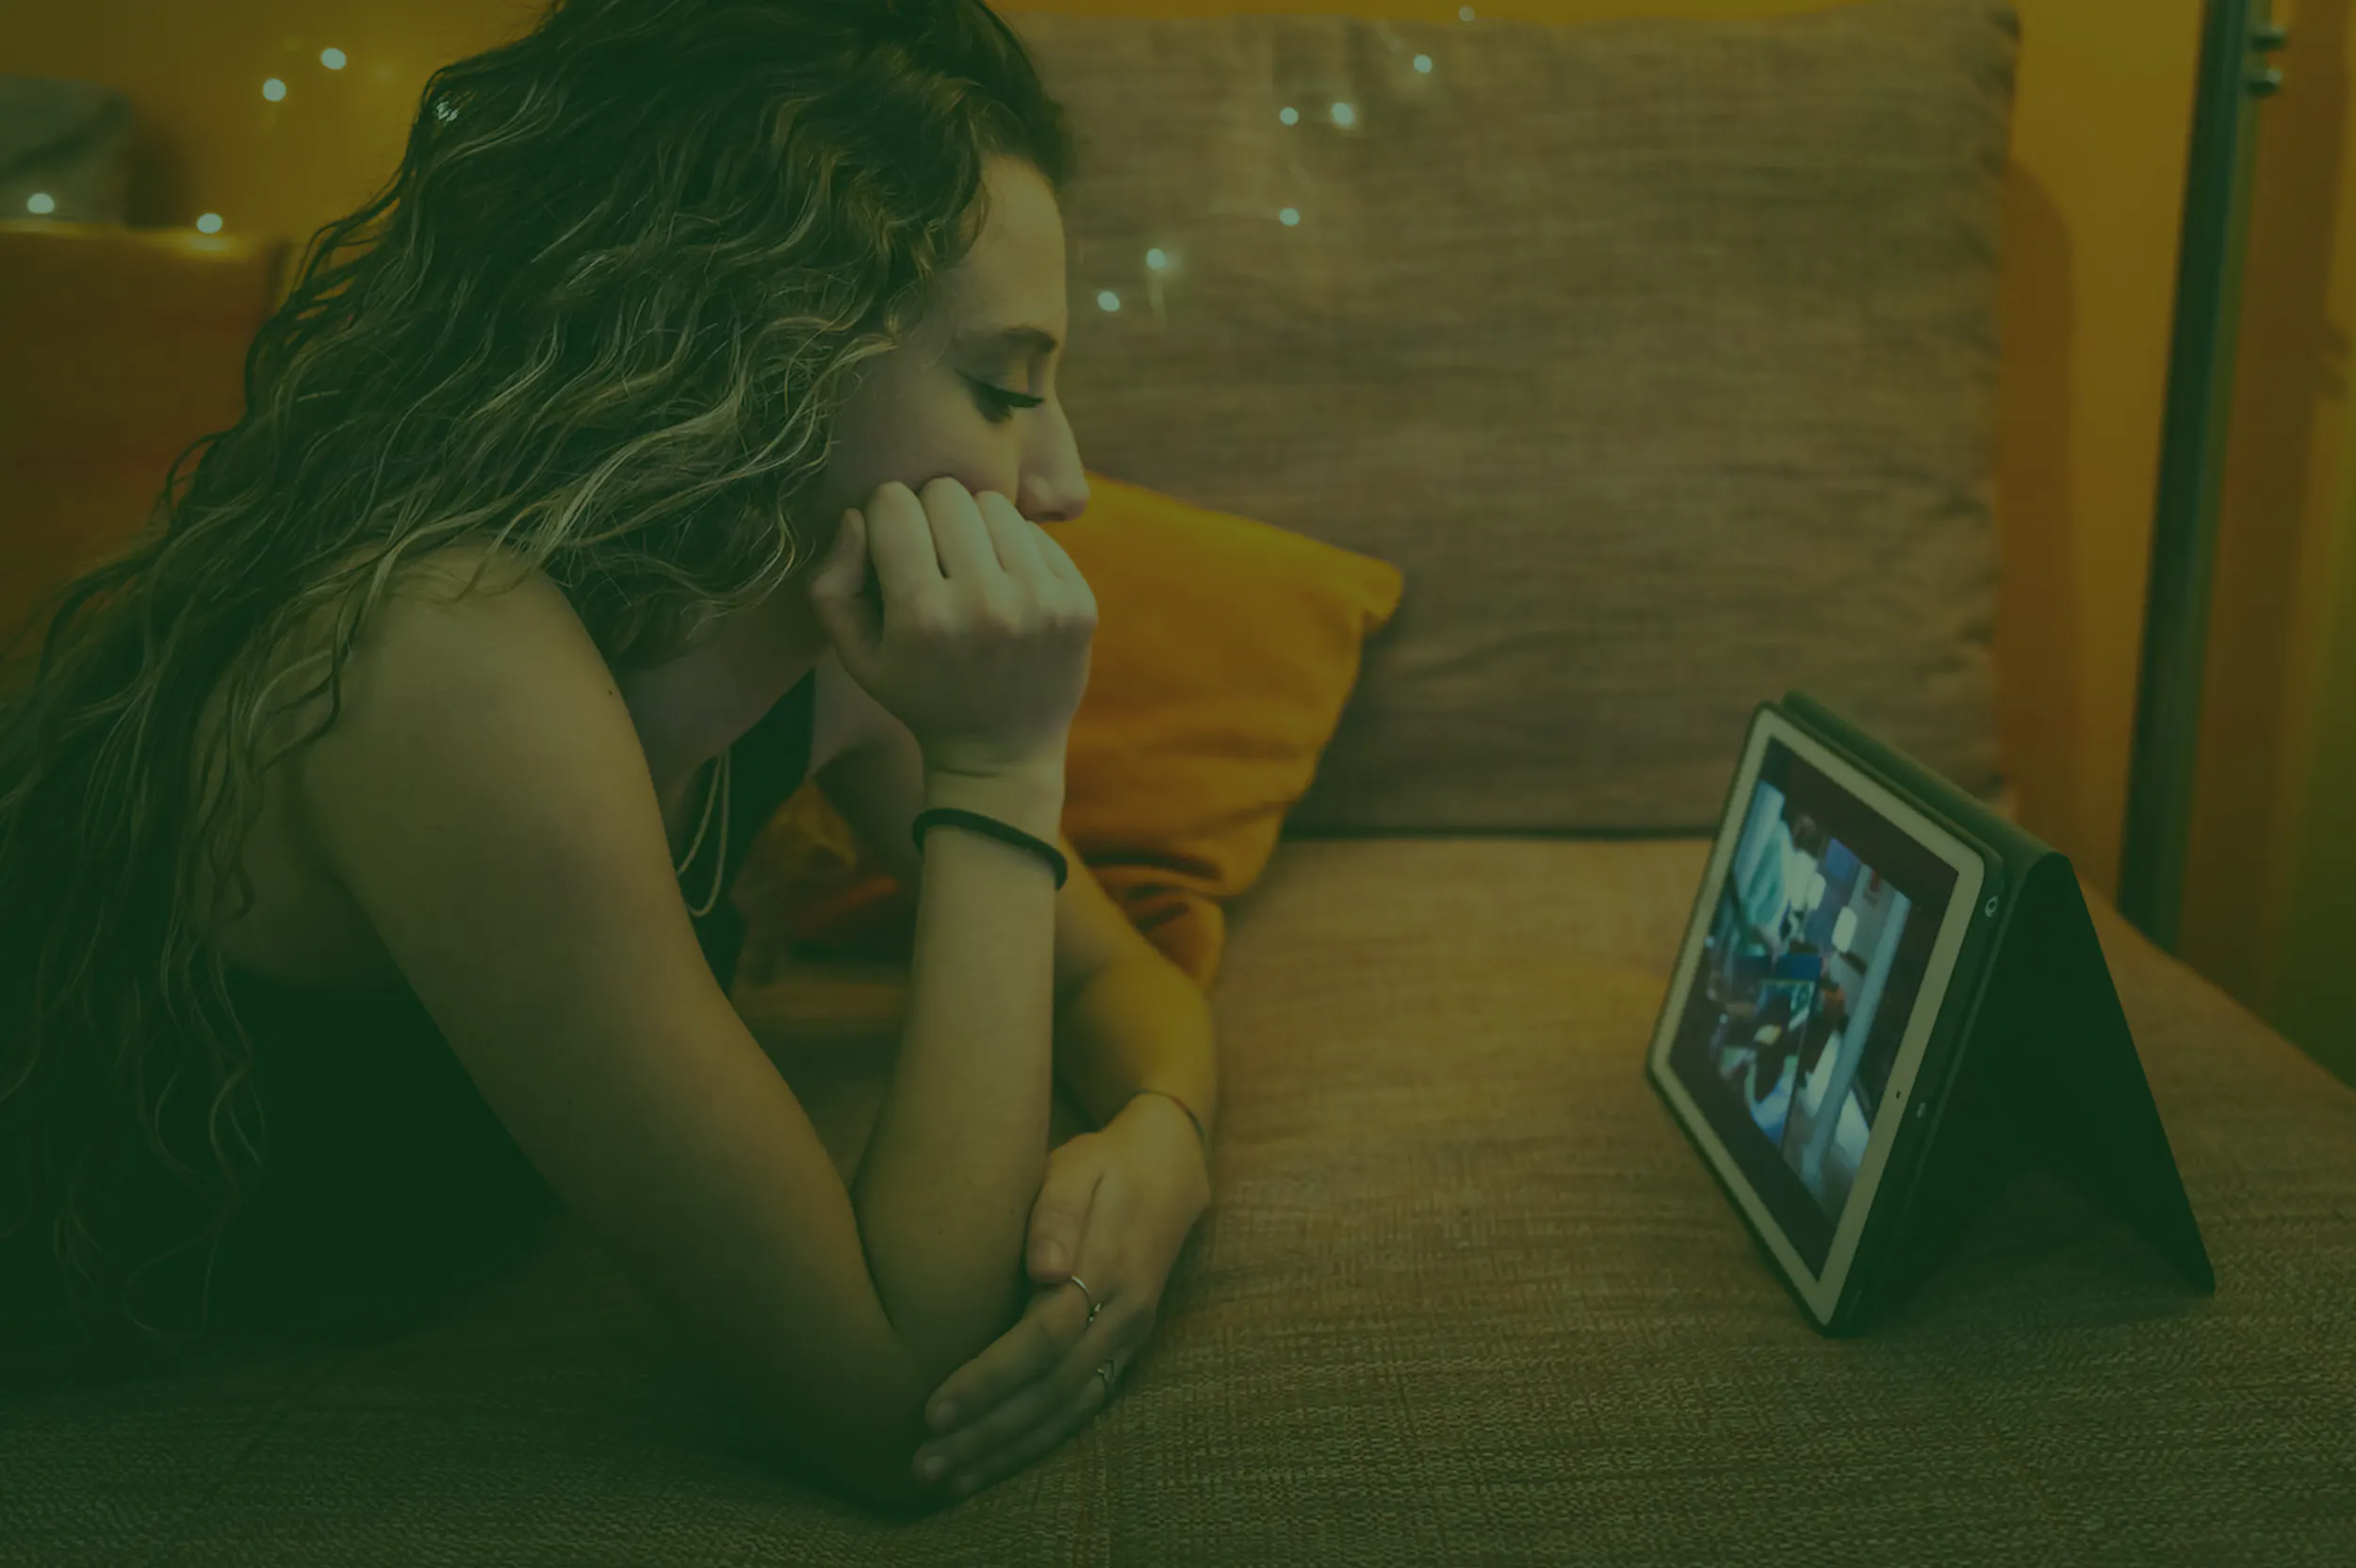 Women watching TV via tablet